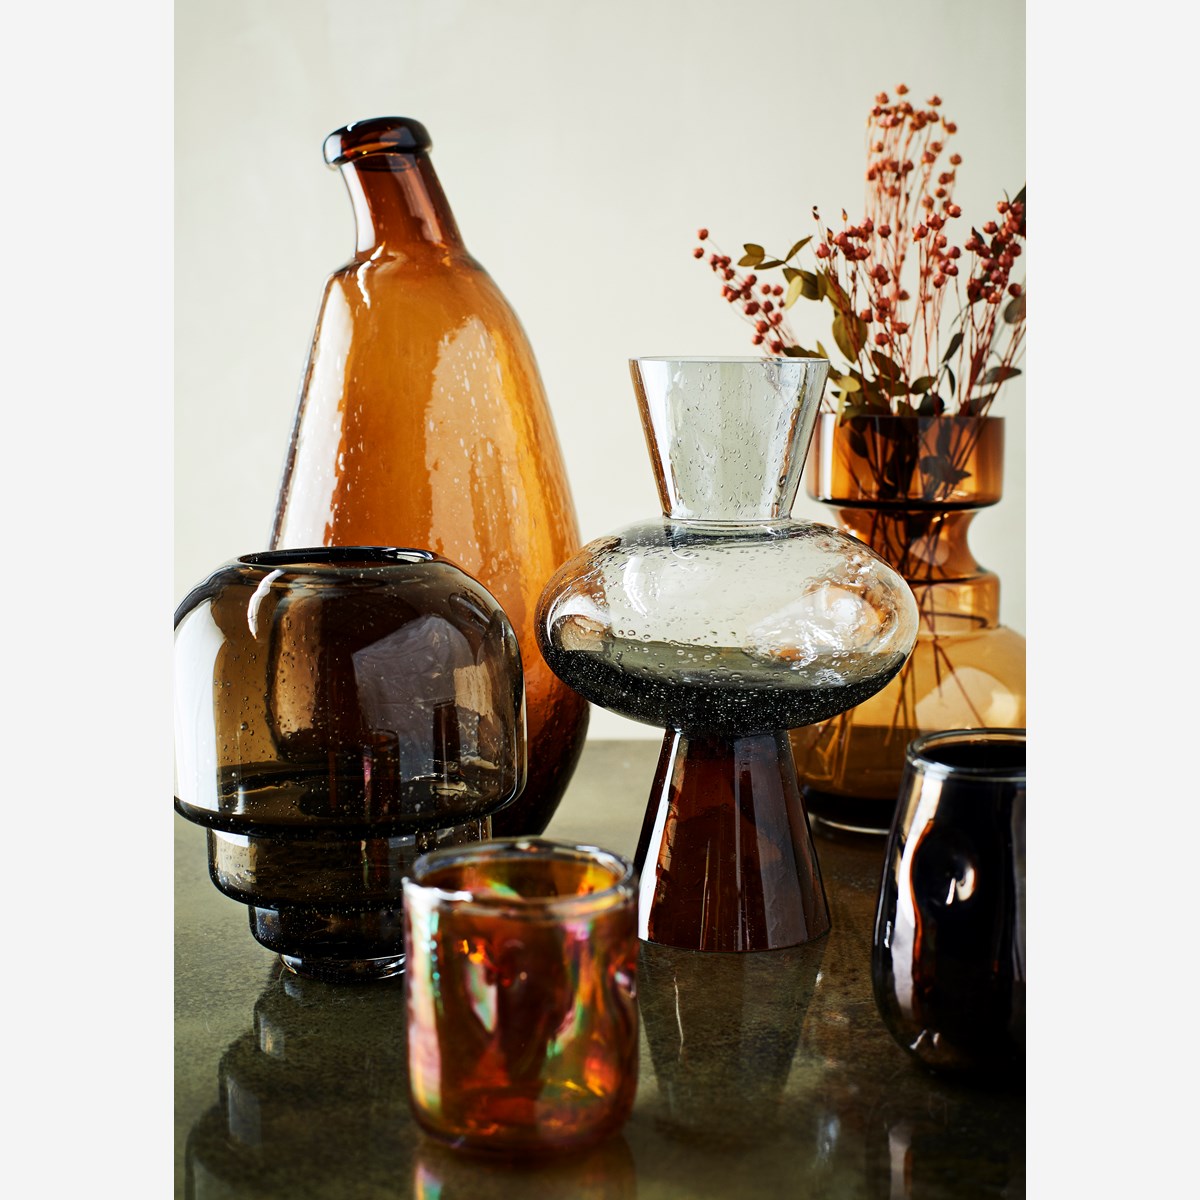 Organic Shapes Glass Vase -
Madam Stoltz